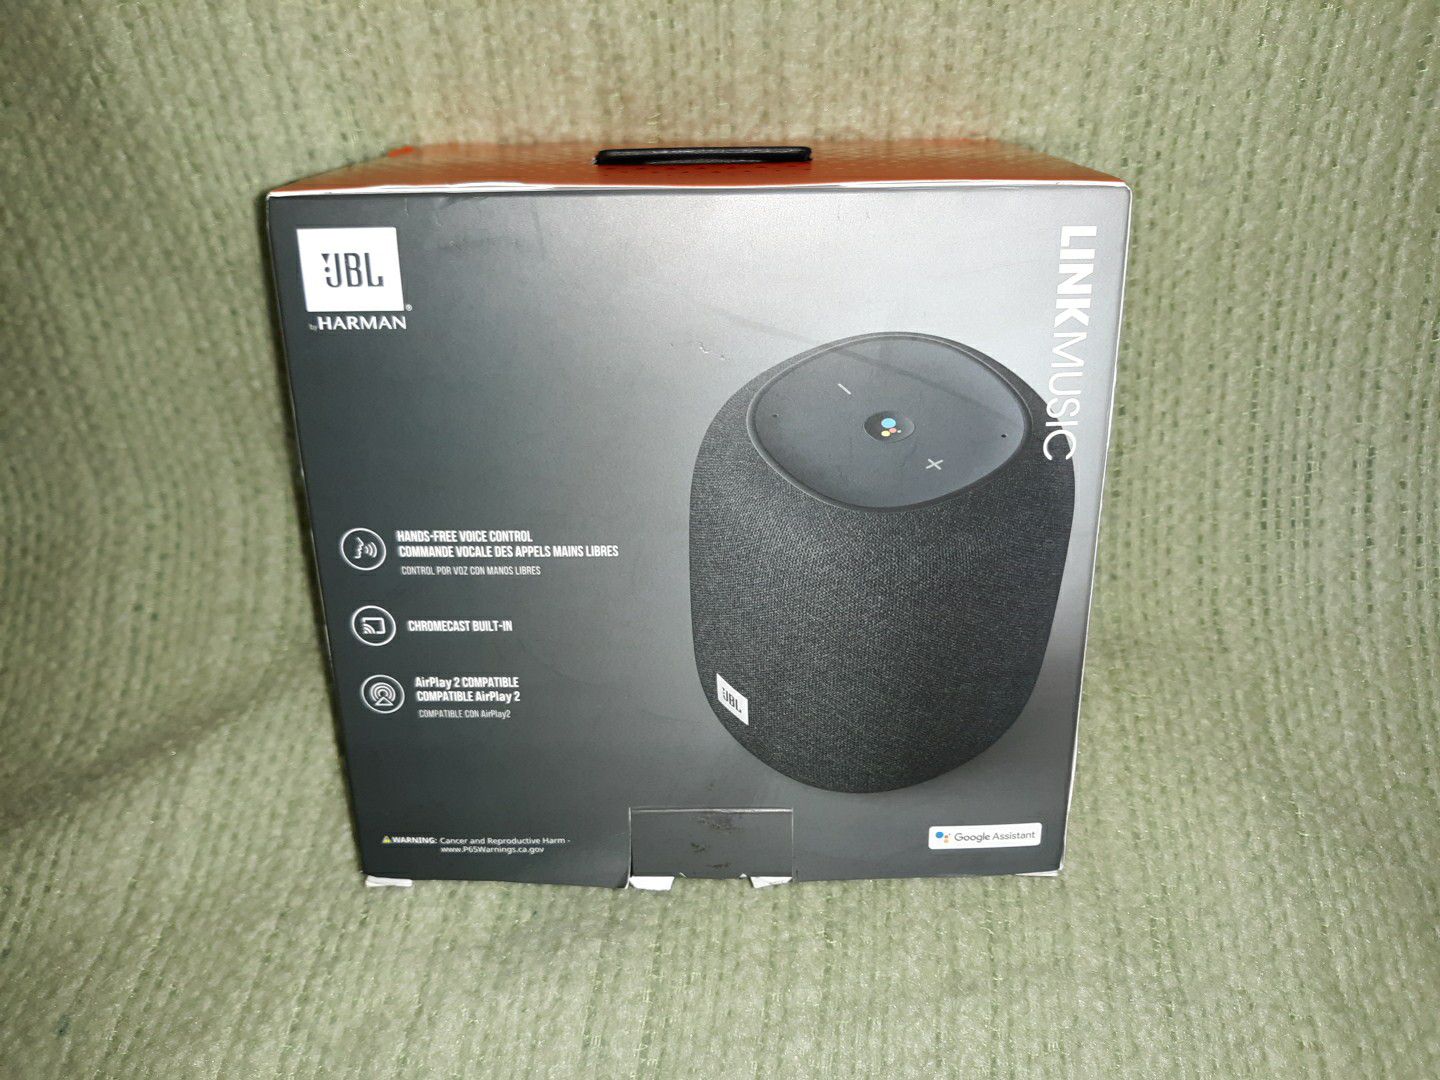 JBL Bluetooth Speaker. New! Google Assistant built in. Great gift!!!